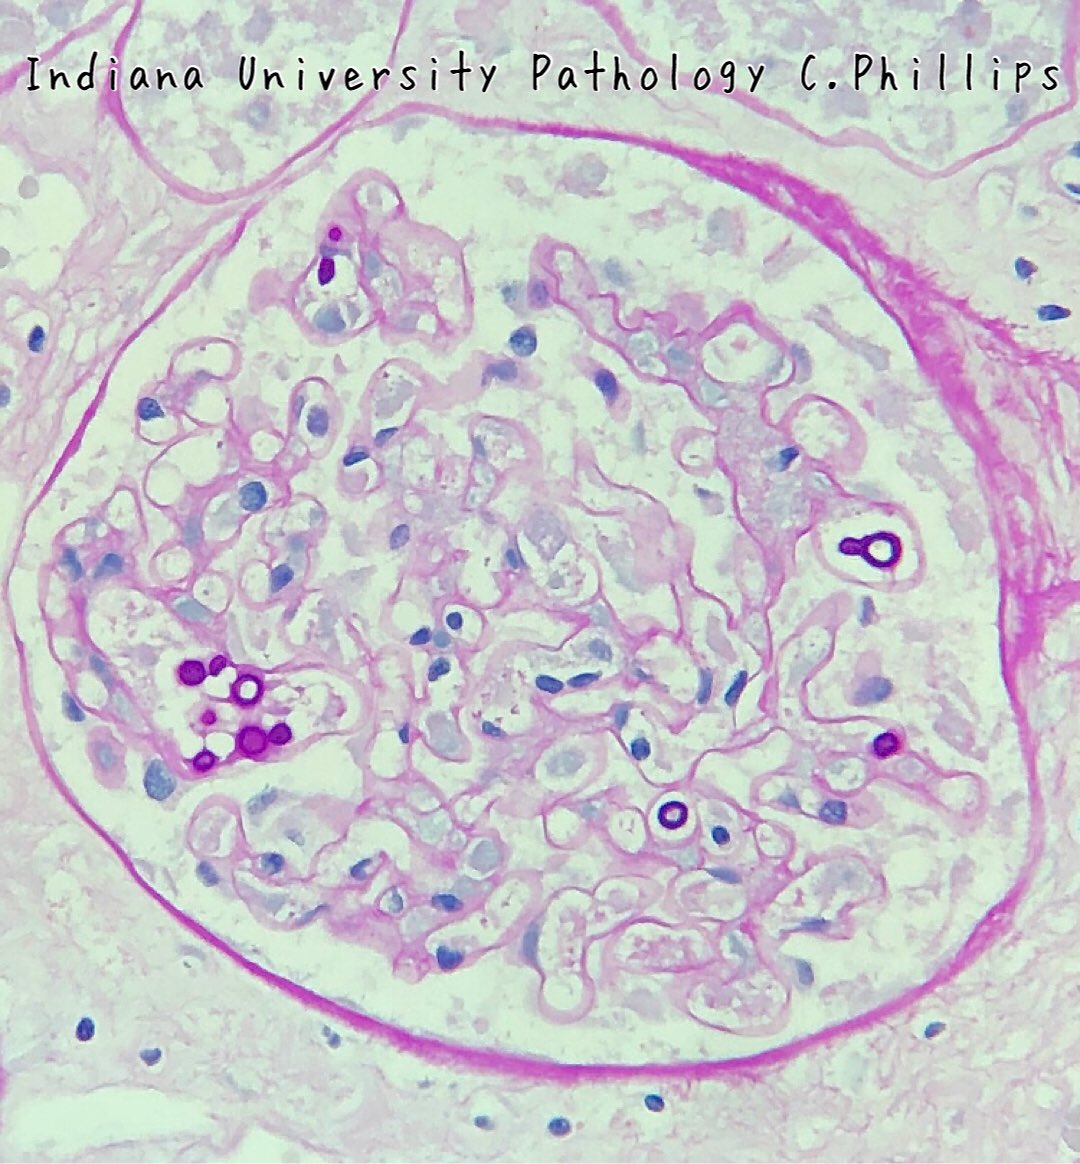 Autopsy kidney. Post-COVID. PAS stain of glomerulus. #renalpath